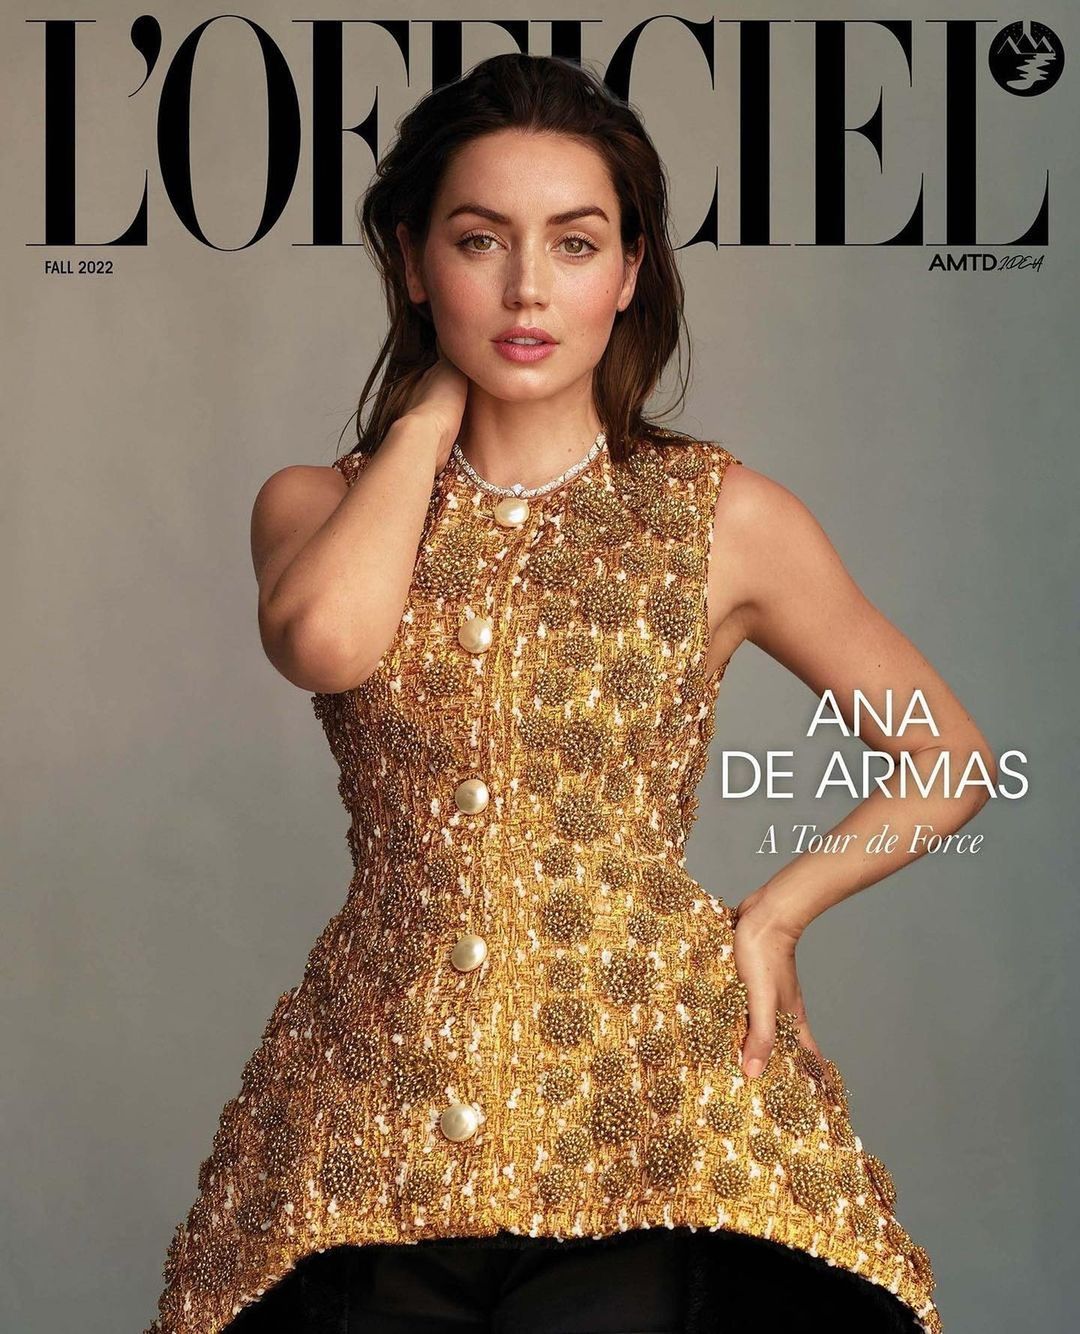 Ana de Armas Photoshoot for L’OFFICIEL PARIS Magazine, Fall 2022